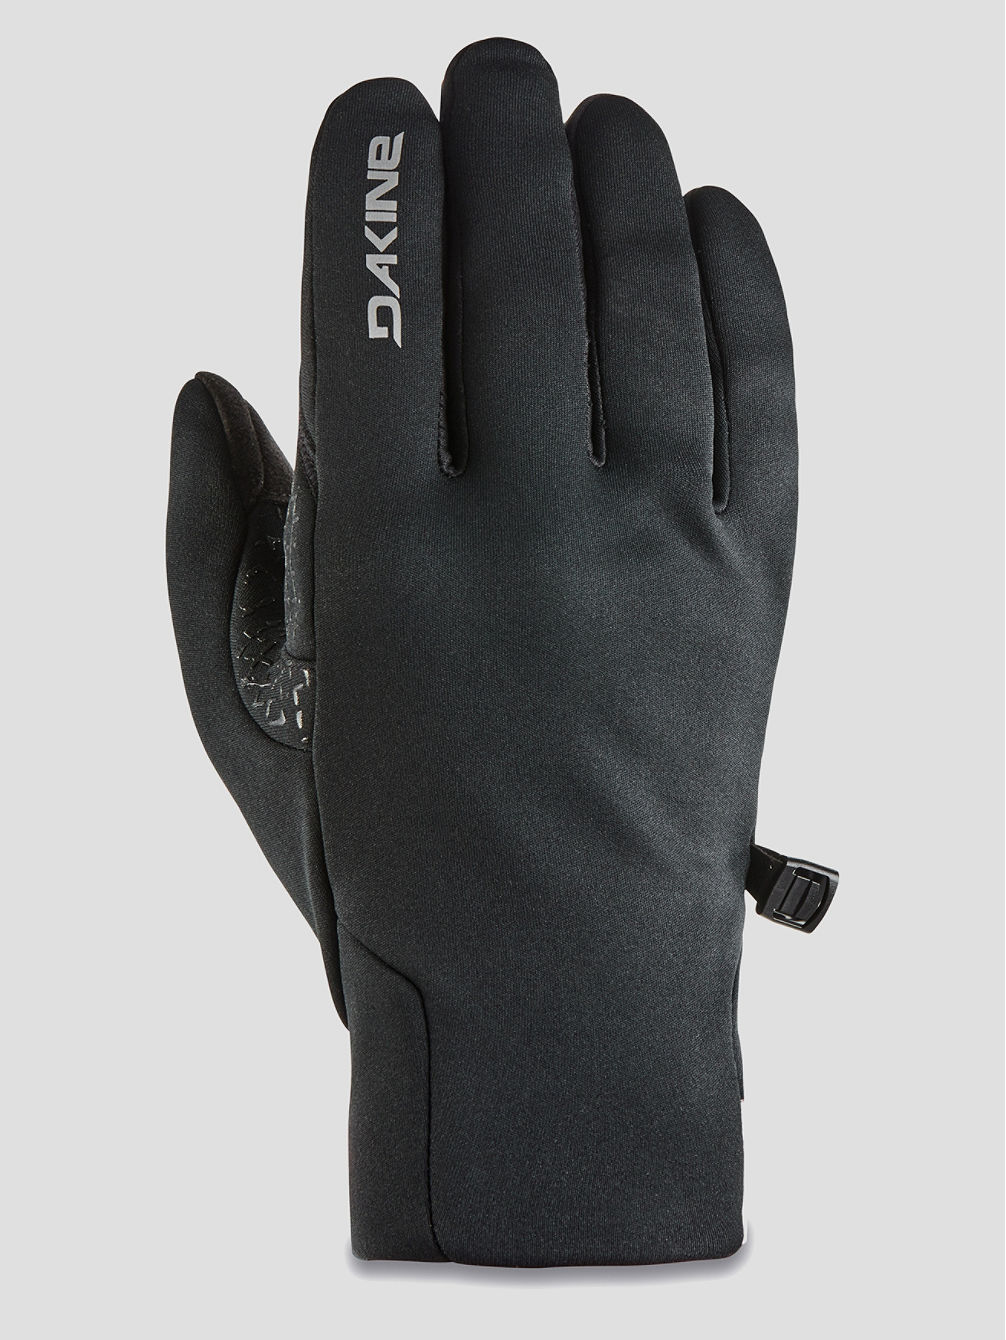 Element Infinium Handschuhe